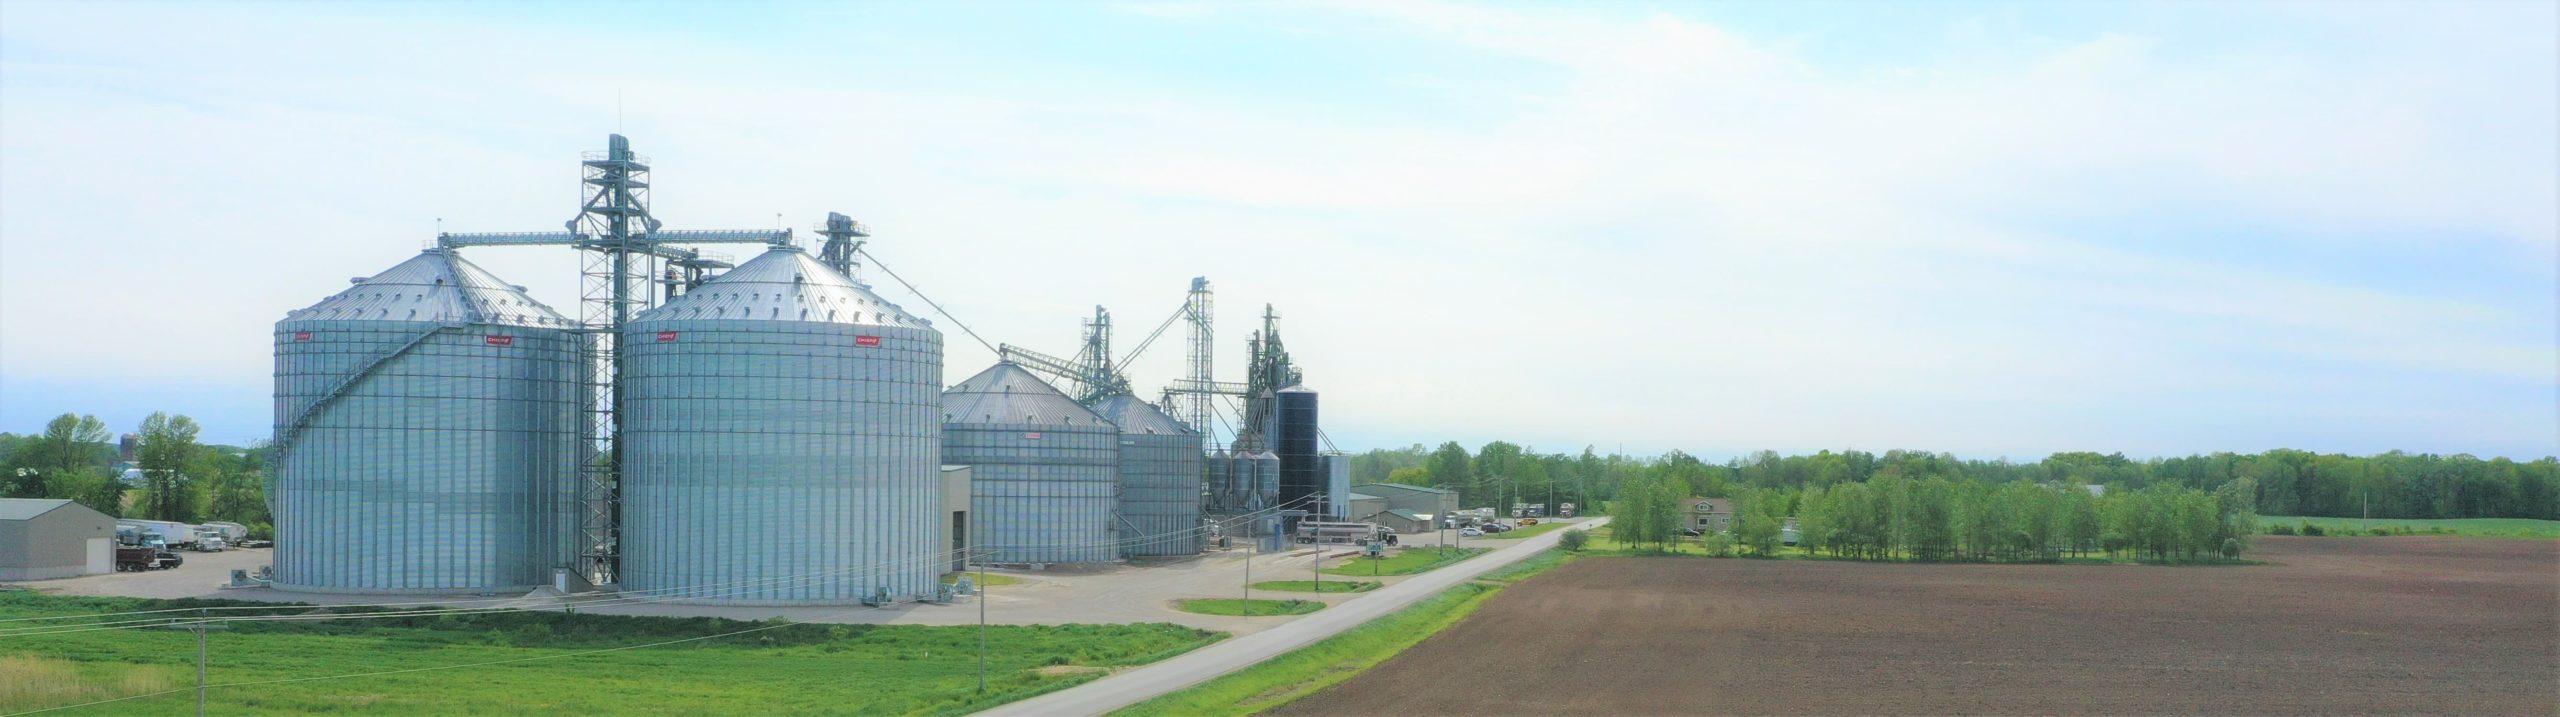 Grain Storage And Licenses